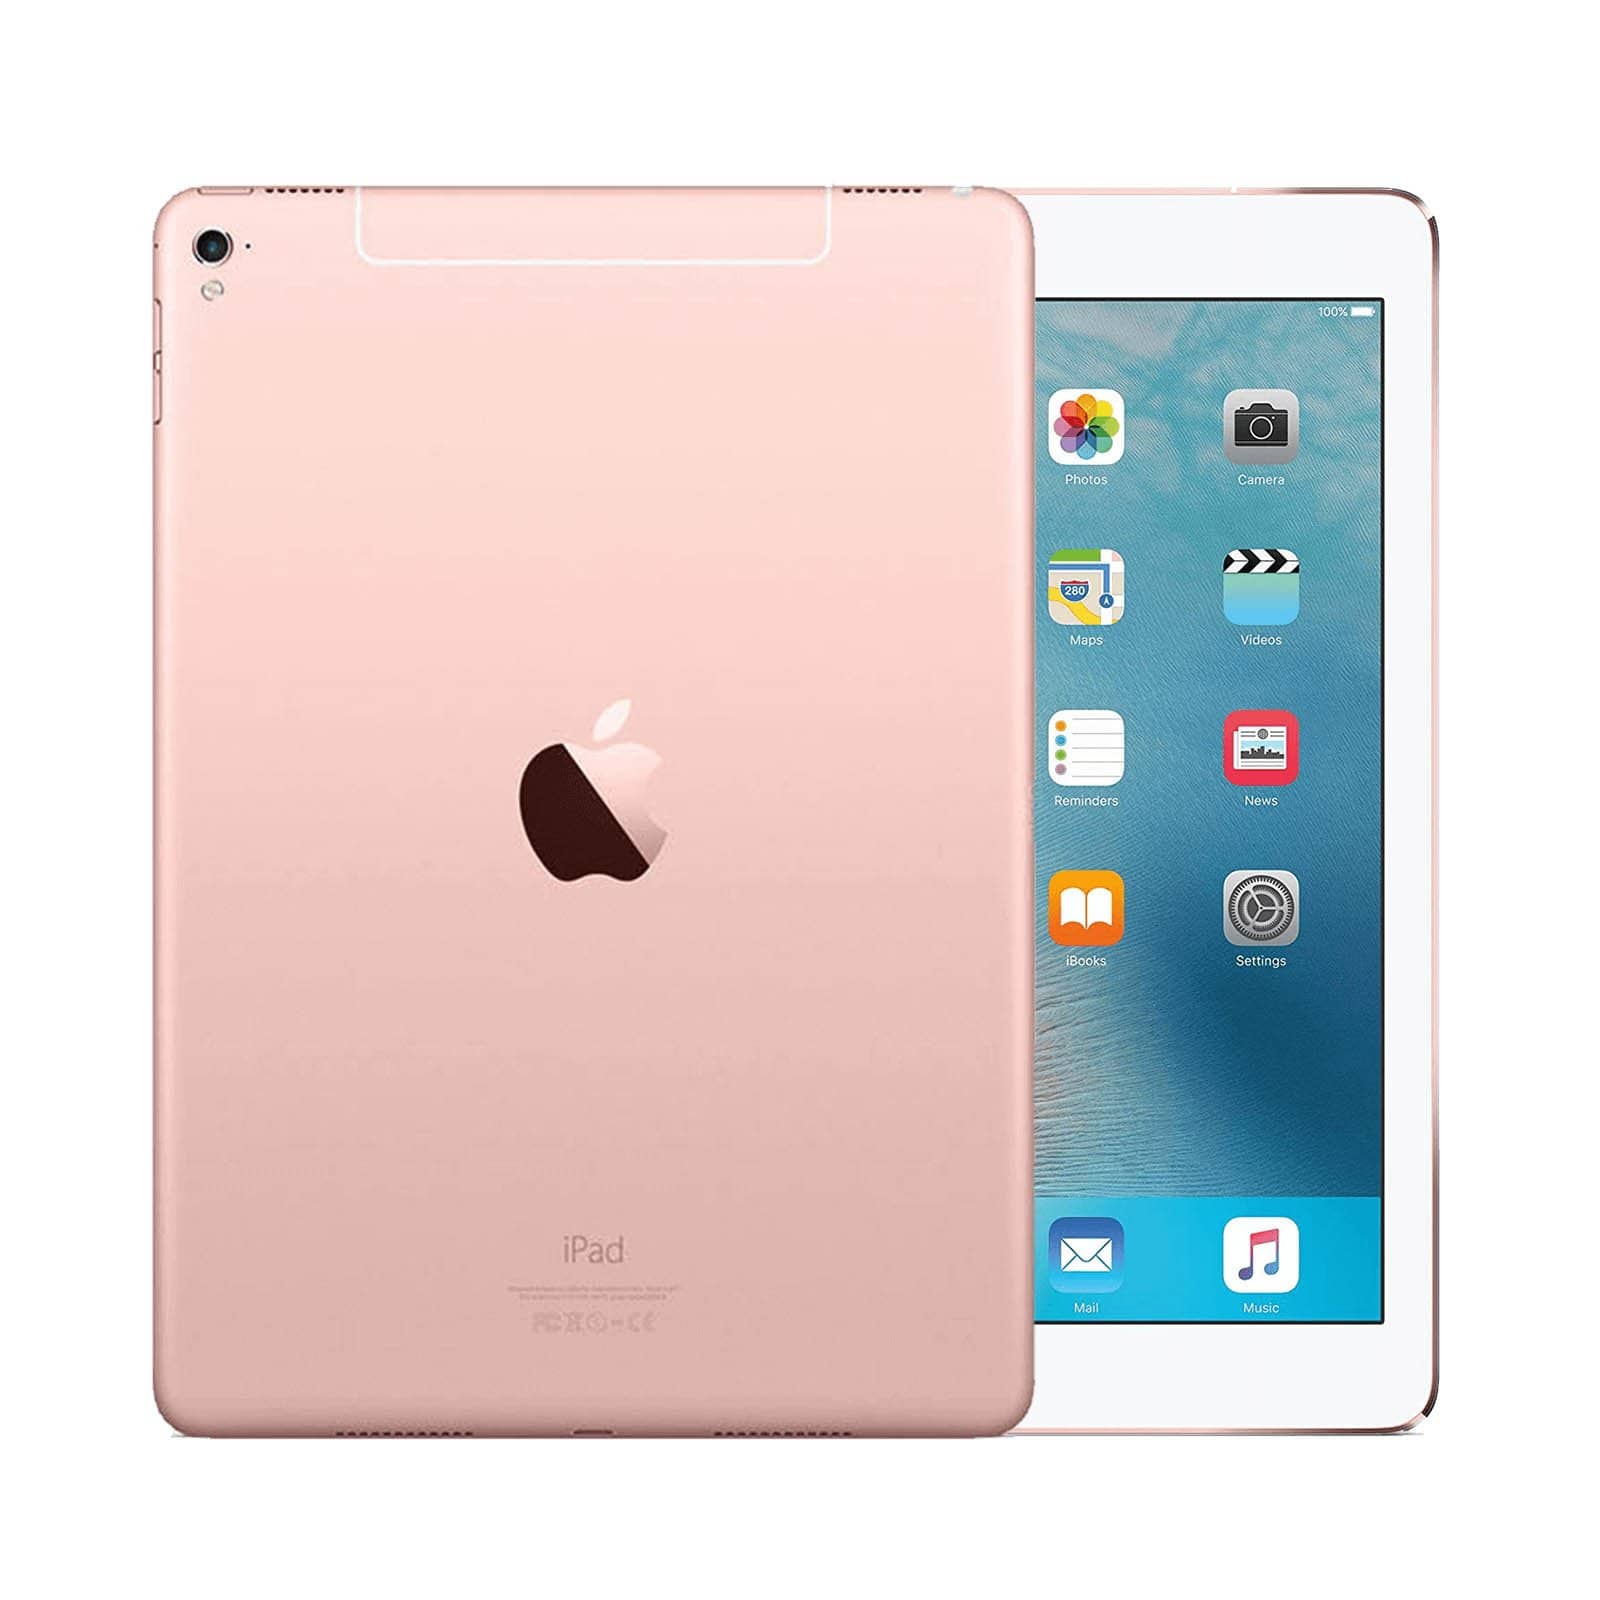 iPad Pro 9.7 Inch 128GB Rose Gold Good - Unlocked 128GB Rose Gold Good